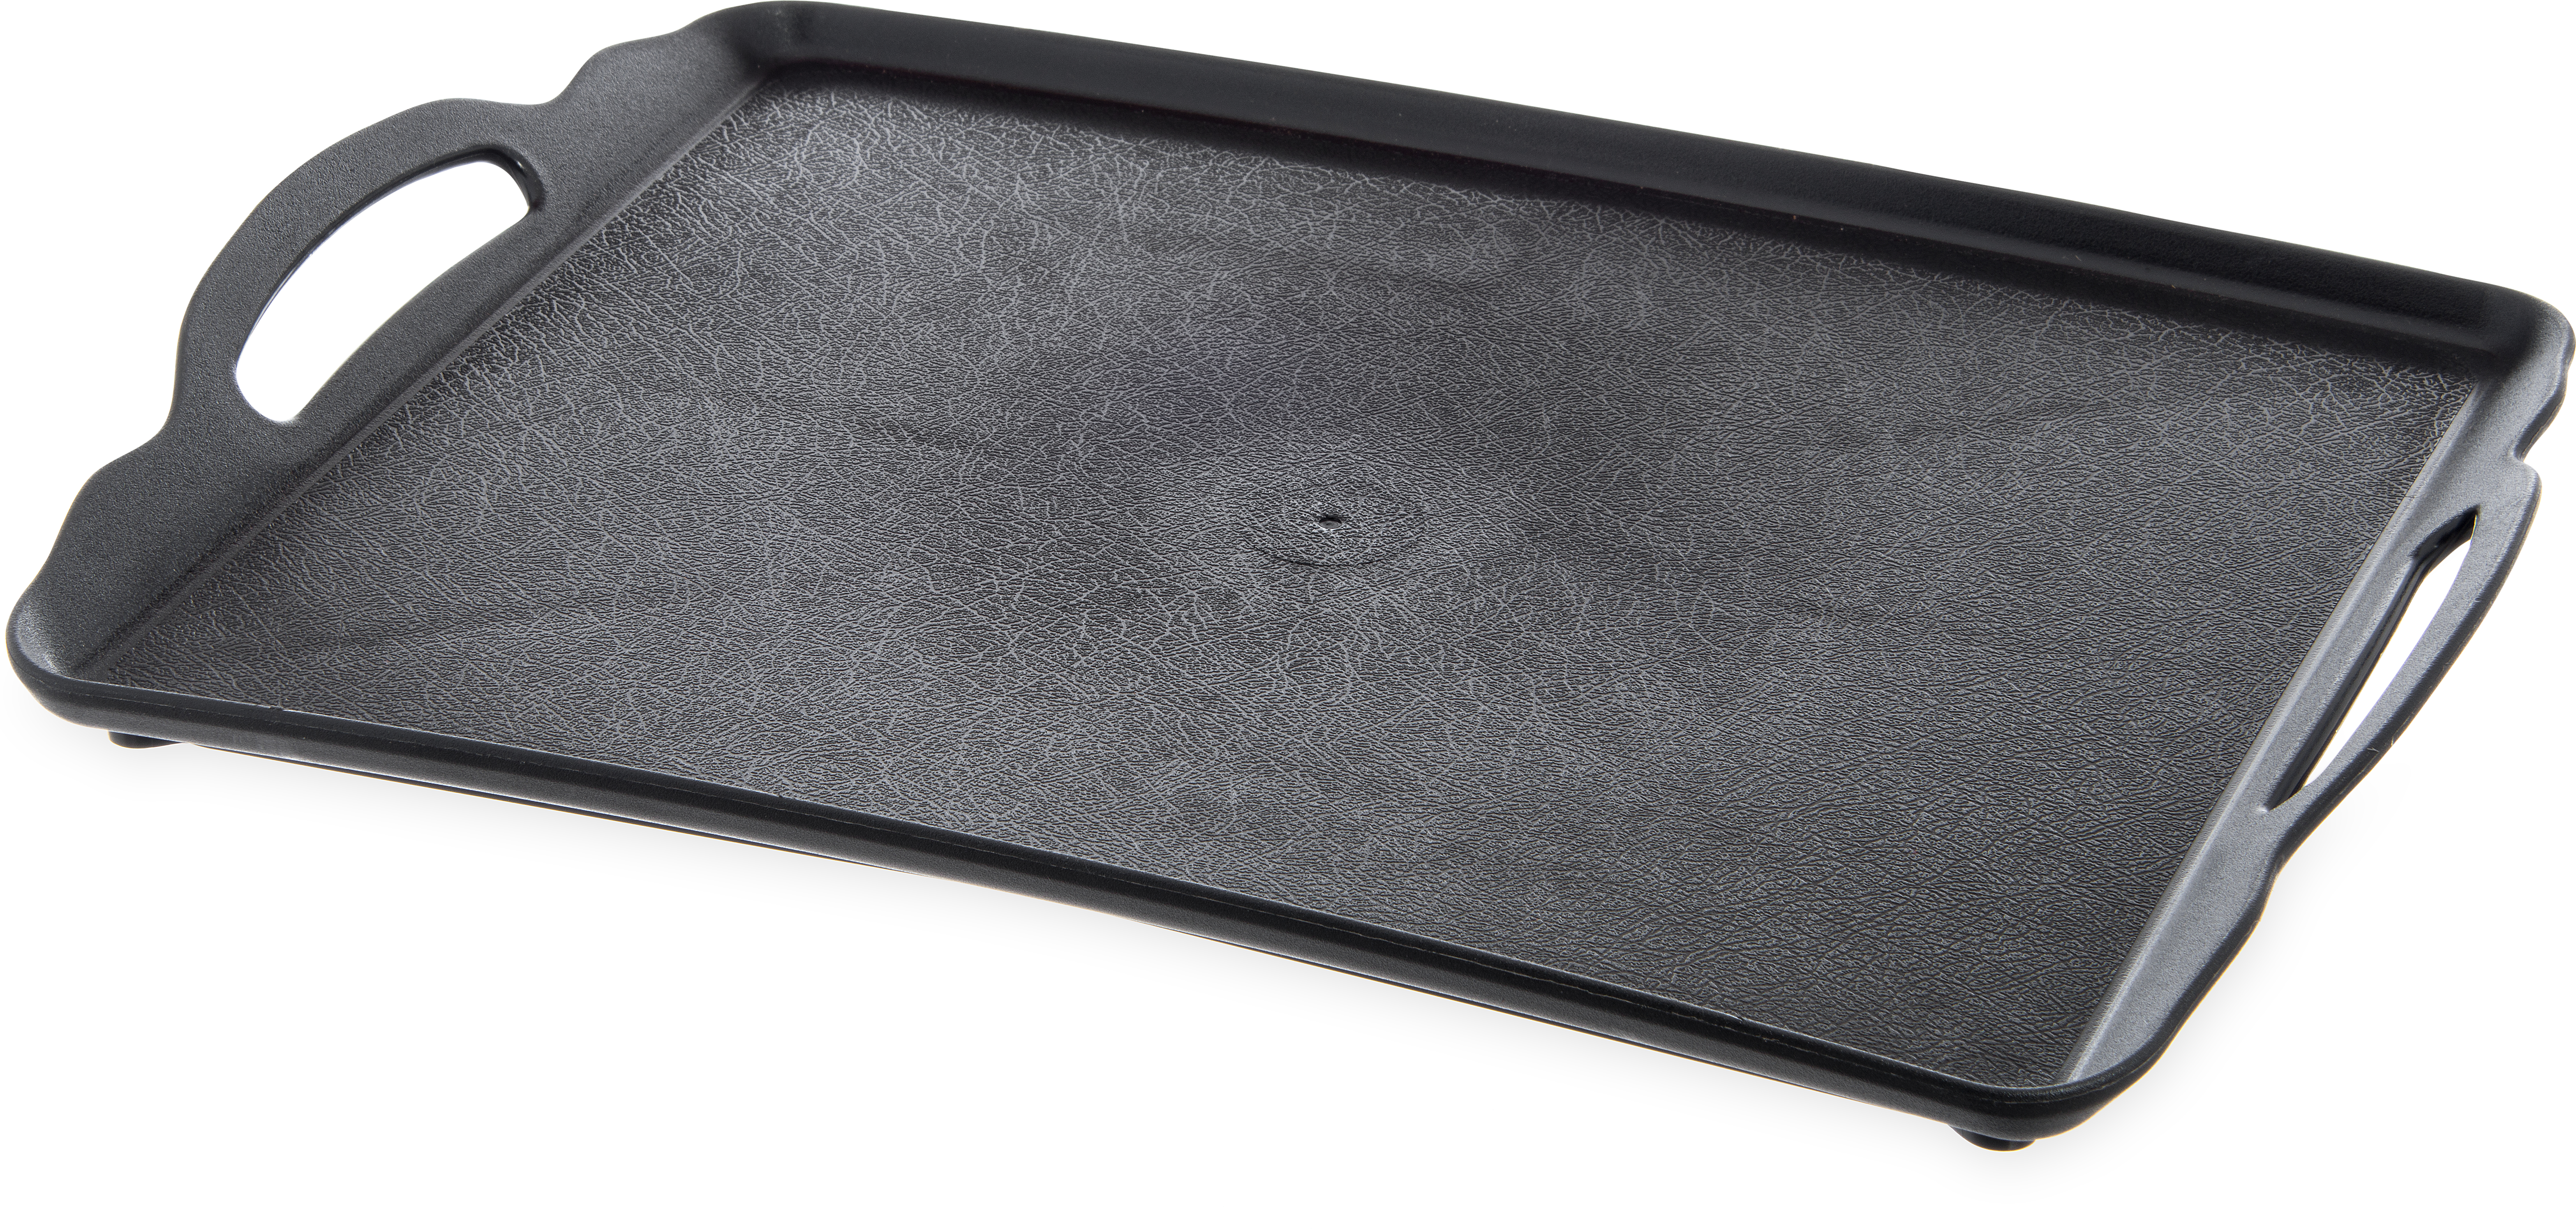 Room Service Tray Low-Profile Non Skid Tray 15 x 20 - Black